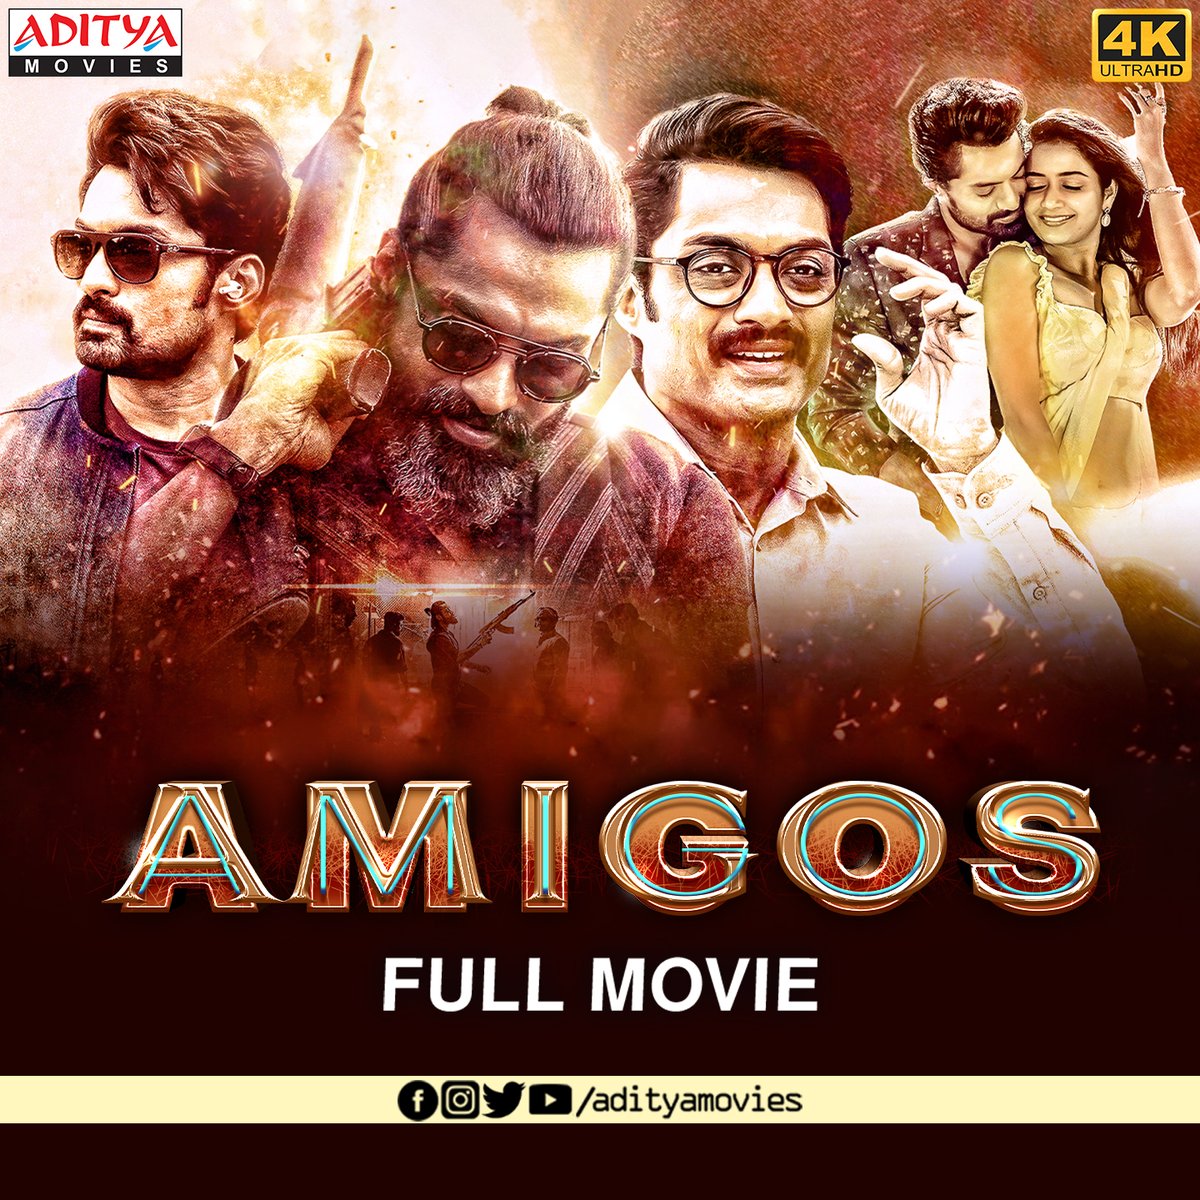 #Amigos Latest Hindi Dubbed Full Movie out now🕺💥 ▶️ youtube.com/watch?v=A7jiNY… It's time to Witness the Doopelganger's Adventurous Action Thriller @NANDAMURIKALYAN @AshikaRanganath @actorbrahmaji #Rajendrareddy #AdityaMovies